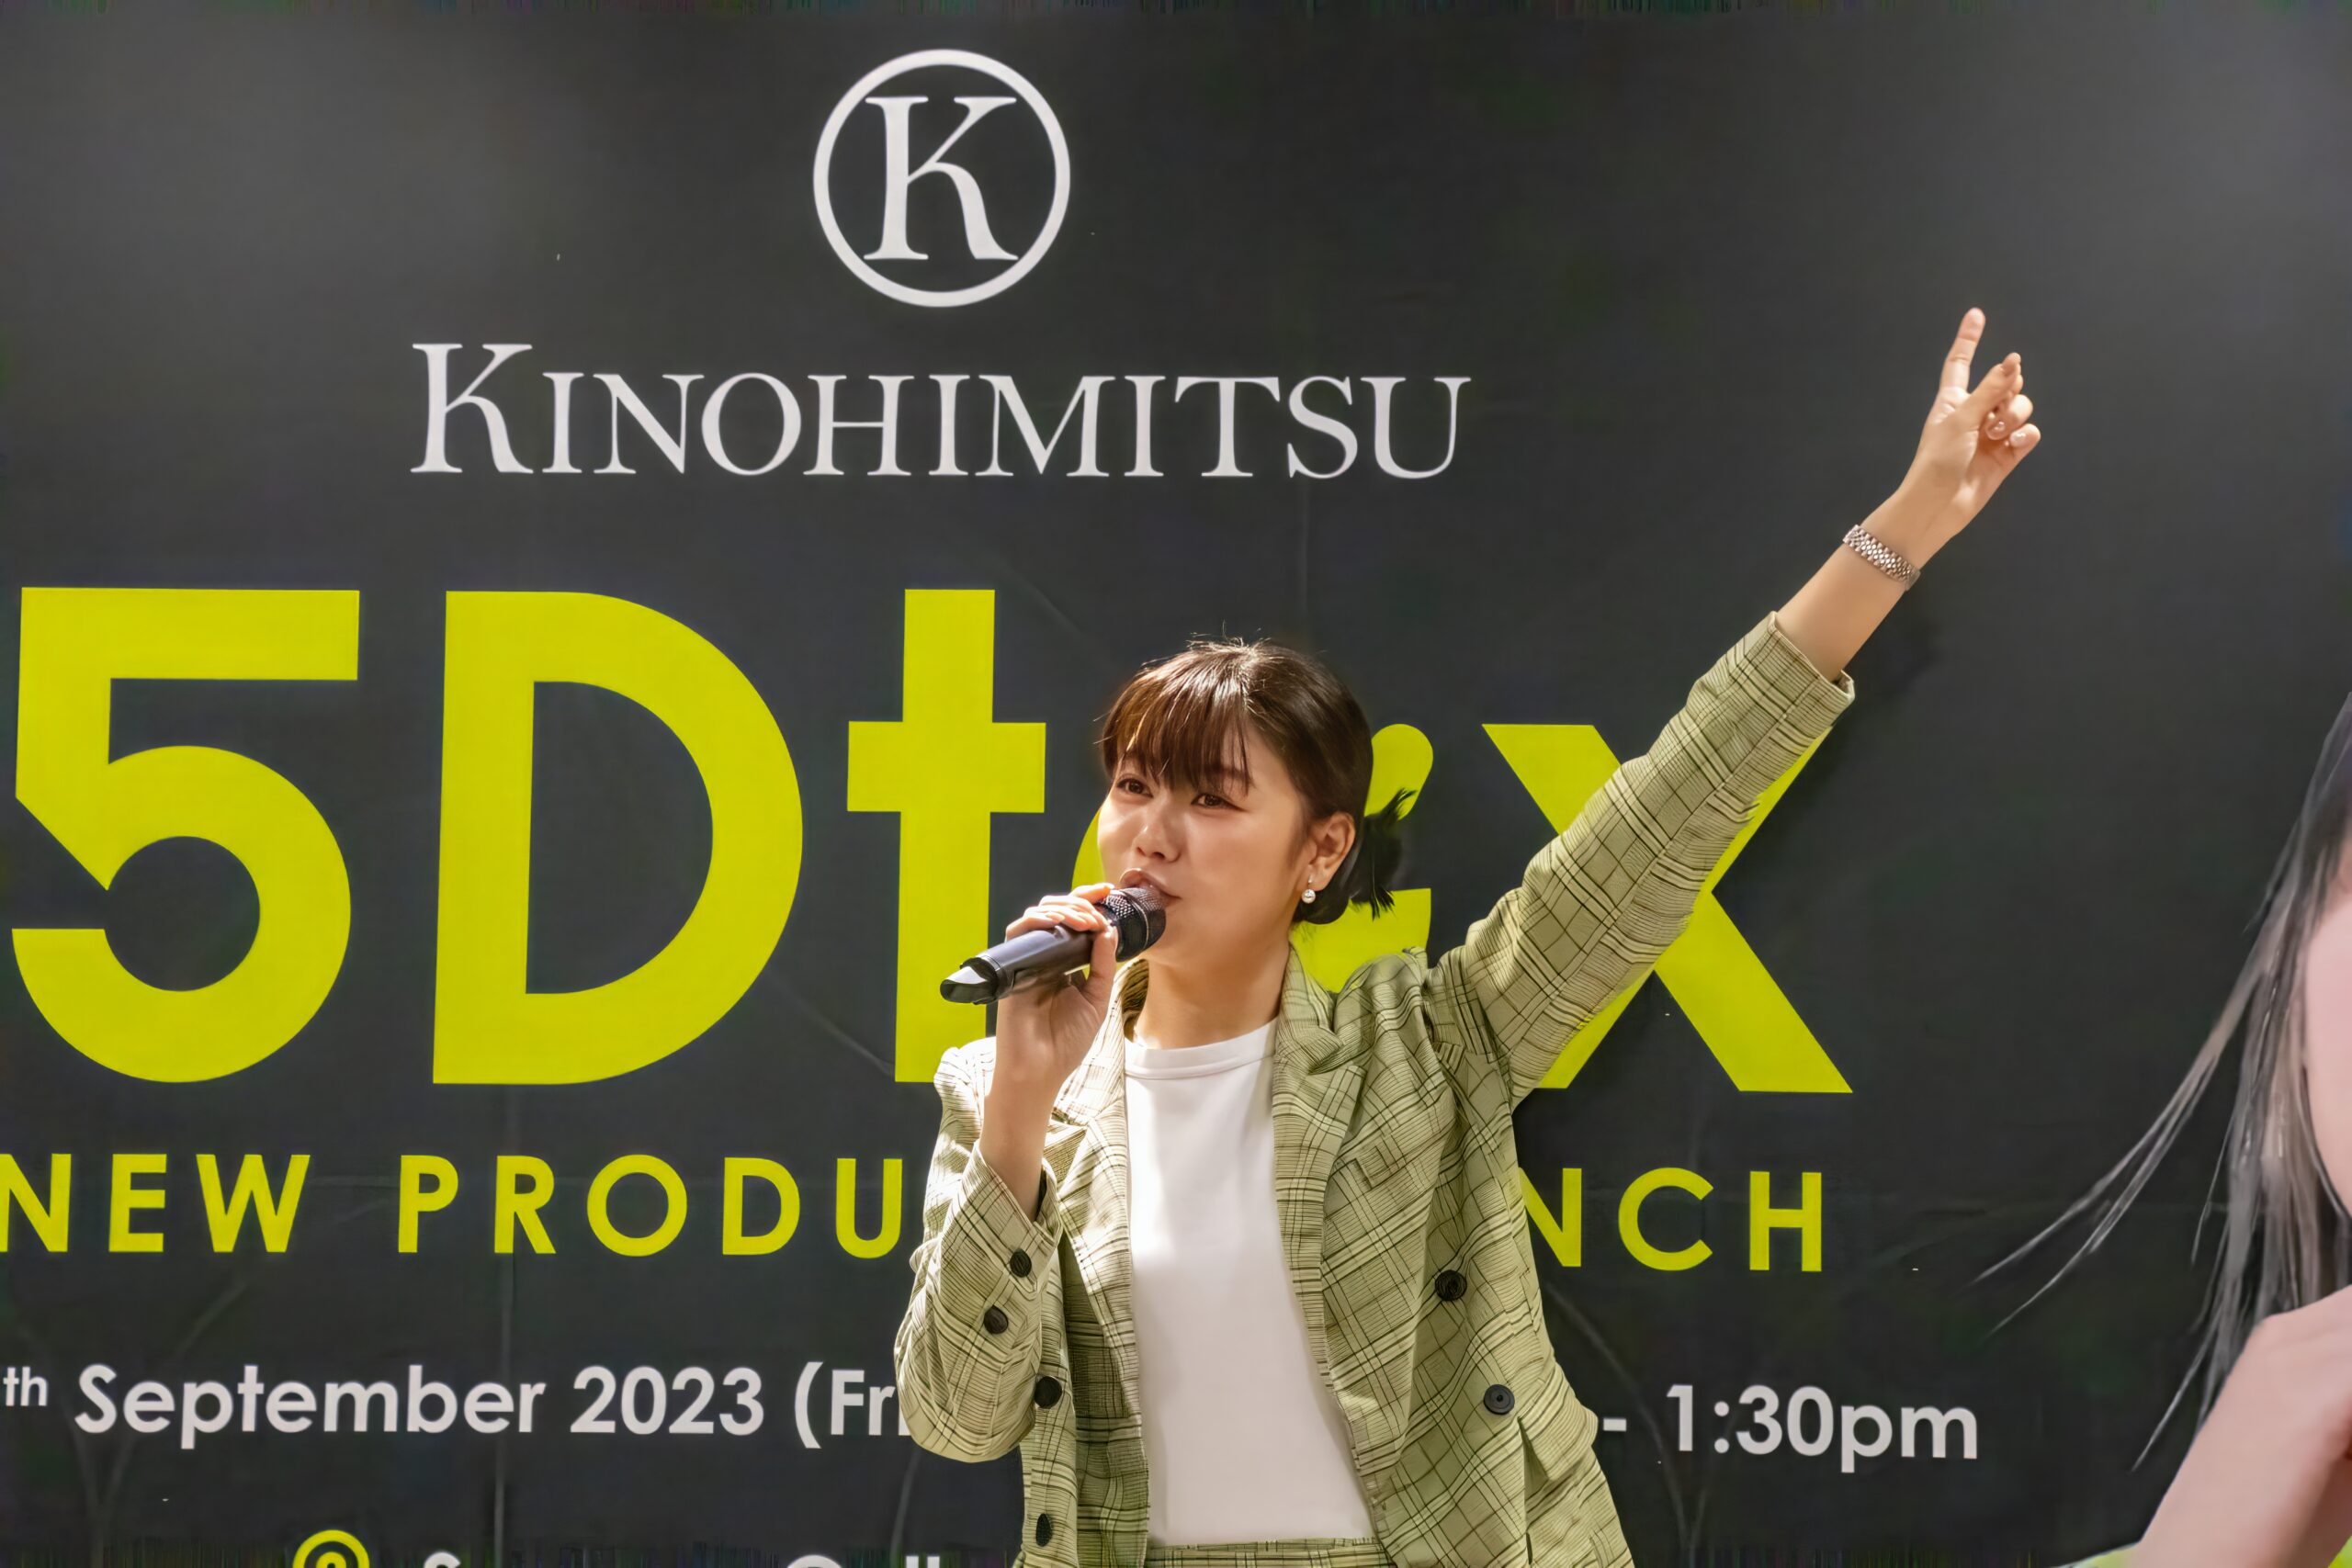 Kinohimitsu 5dtox: a resounding success at the grand unveiling | weirdkaya